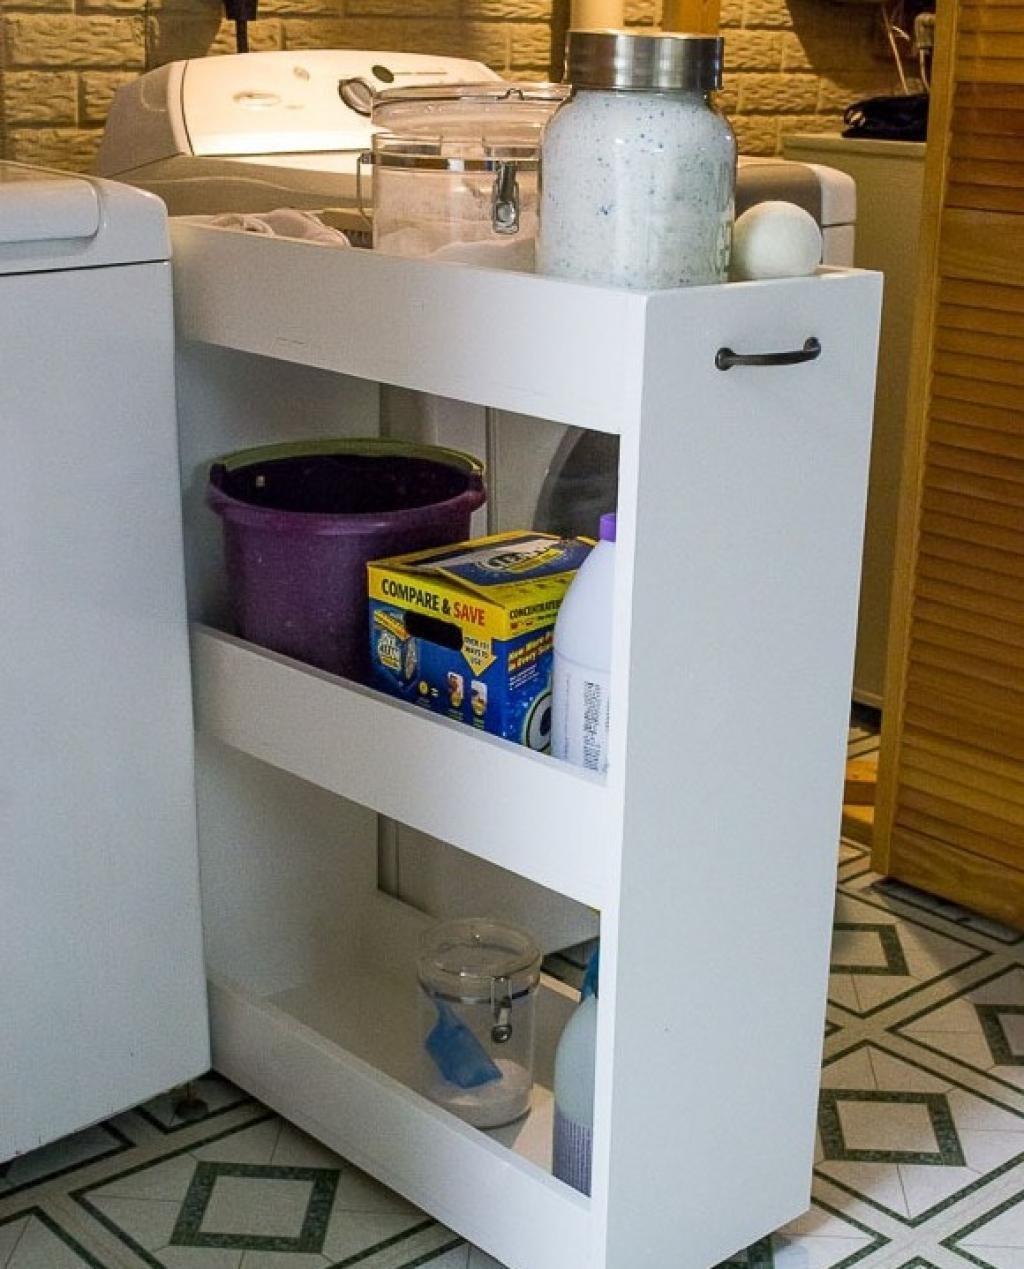  полка для кухни на колесиках за холодильник - 96 фото